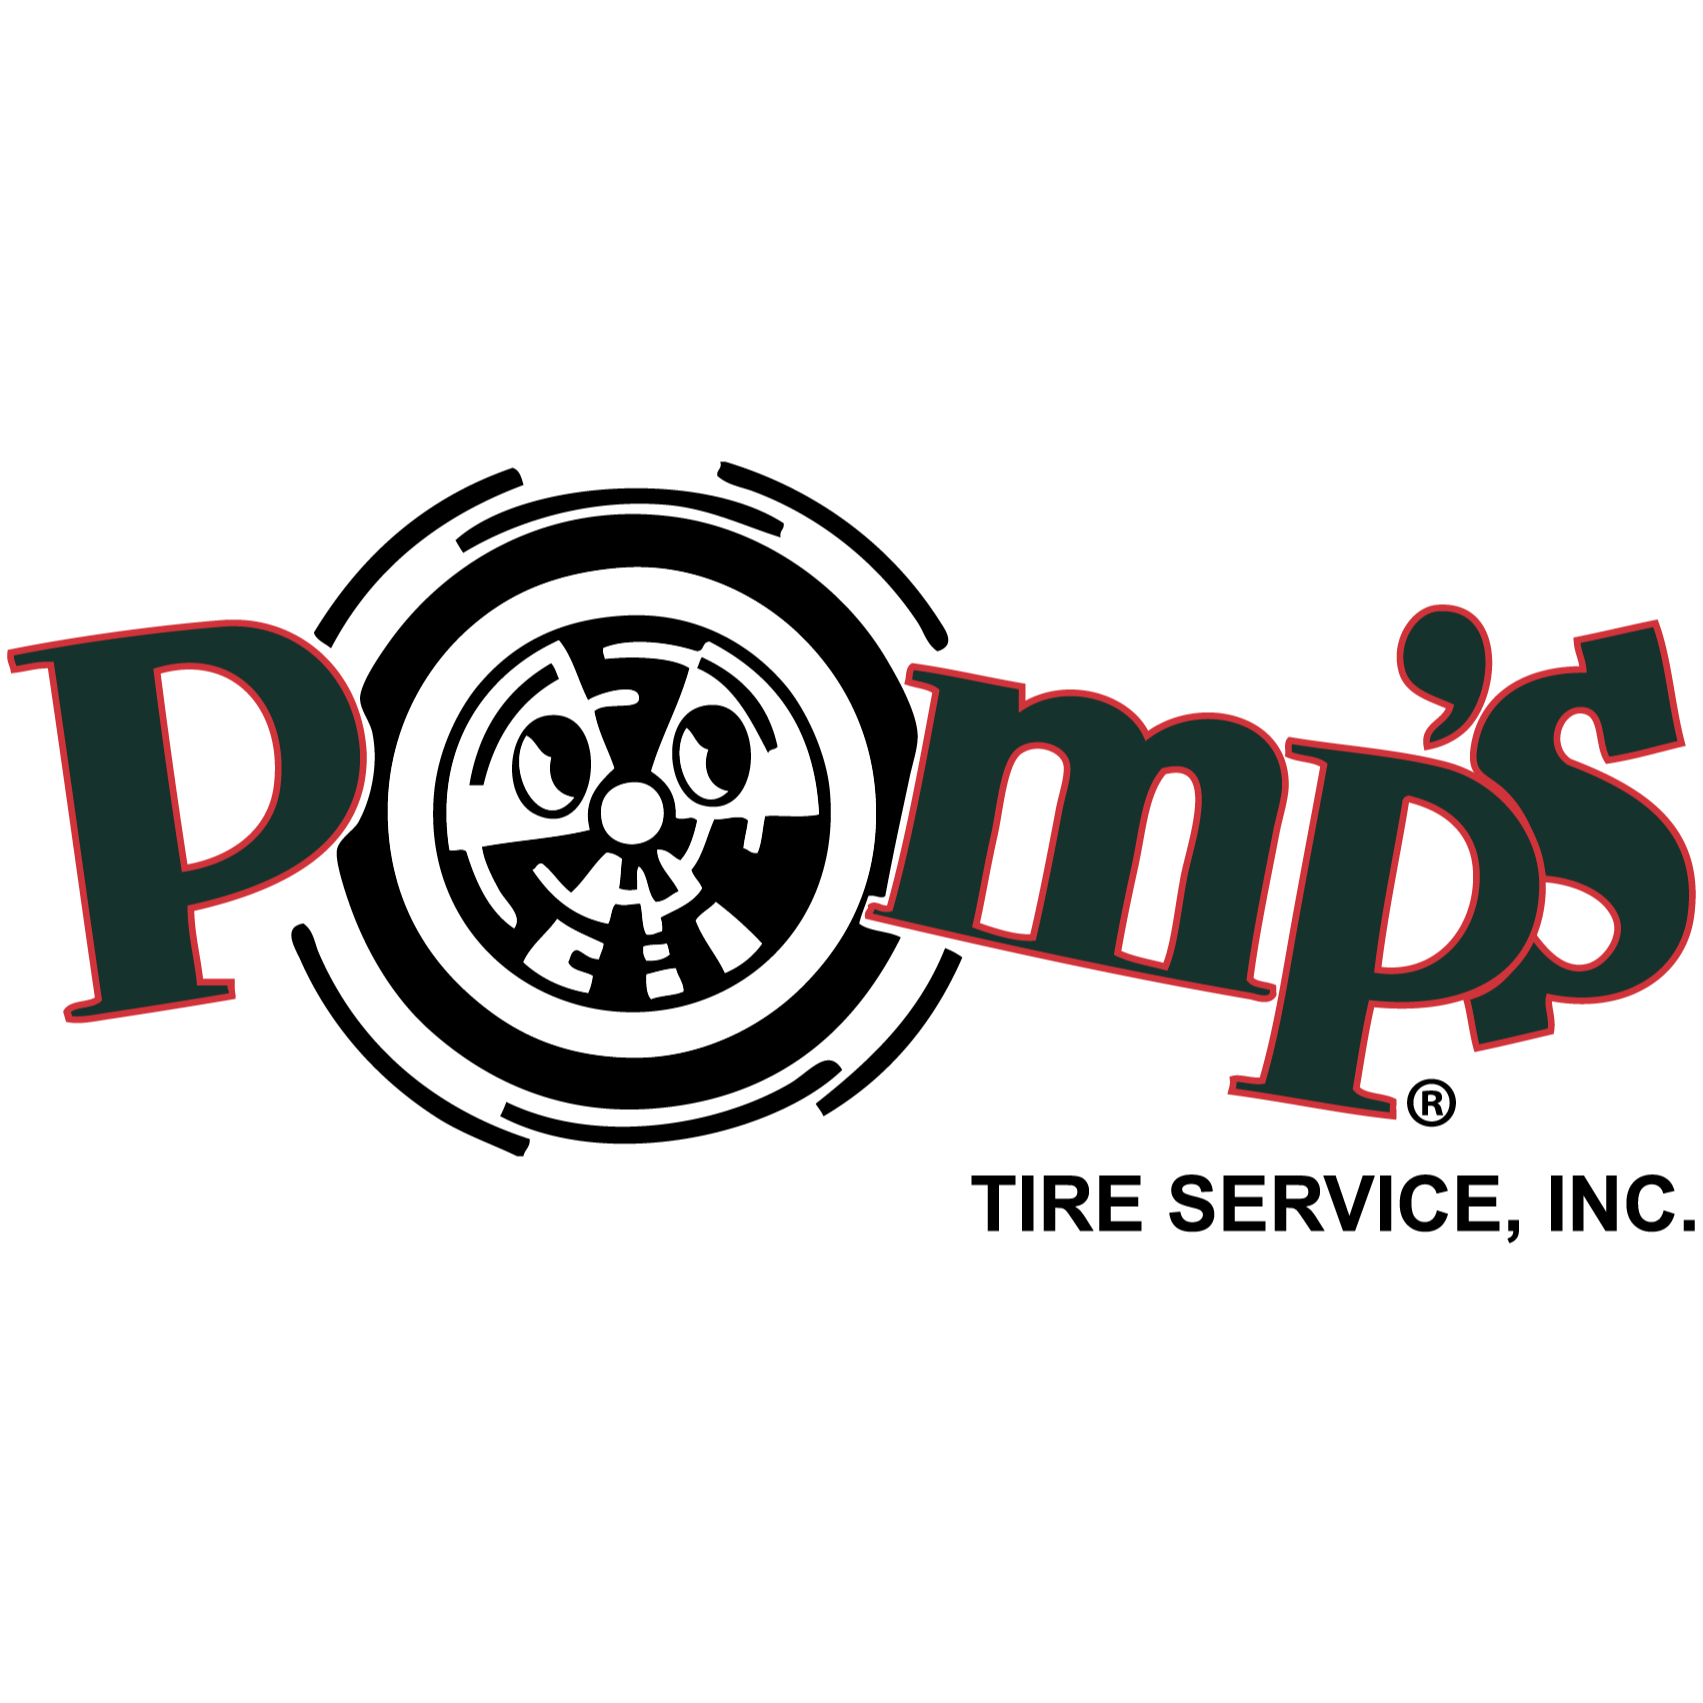 Pomp's Tire Service - Topeka, KS 66608 - (785)235-9246 | ShowMeLocal.com